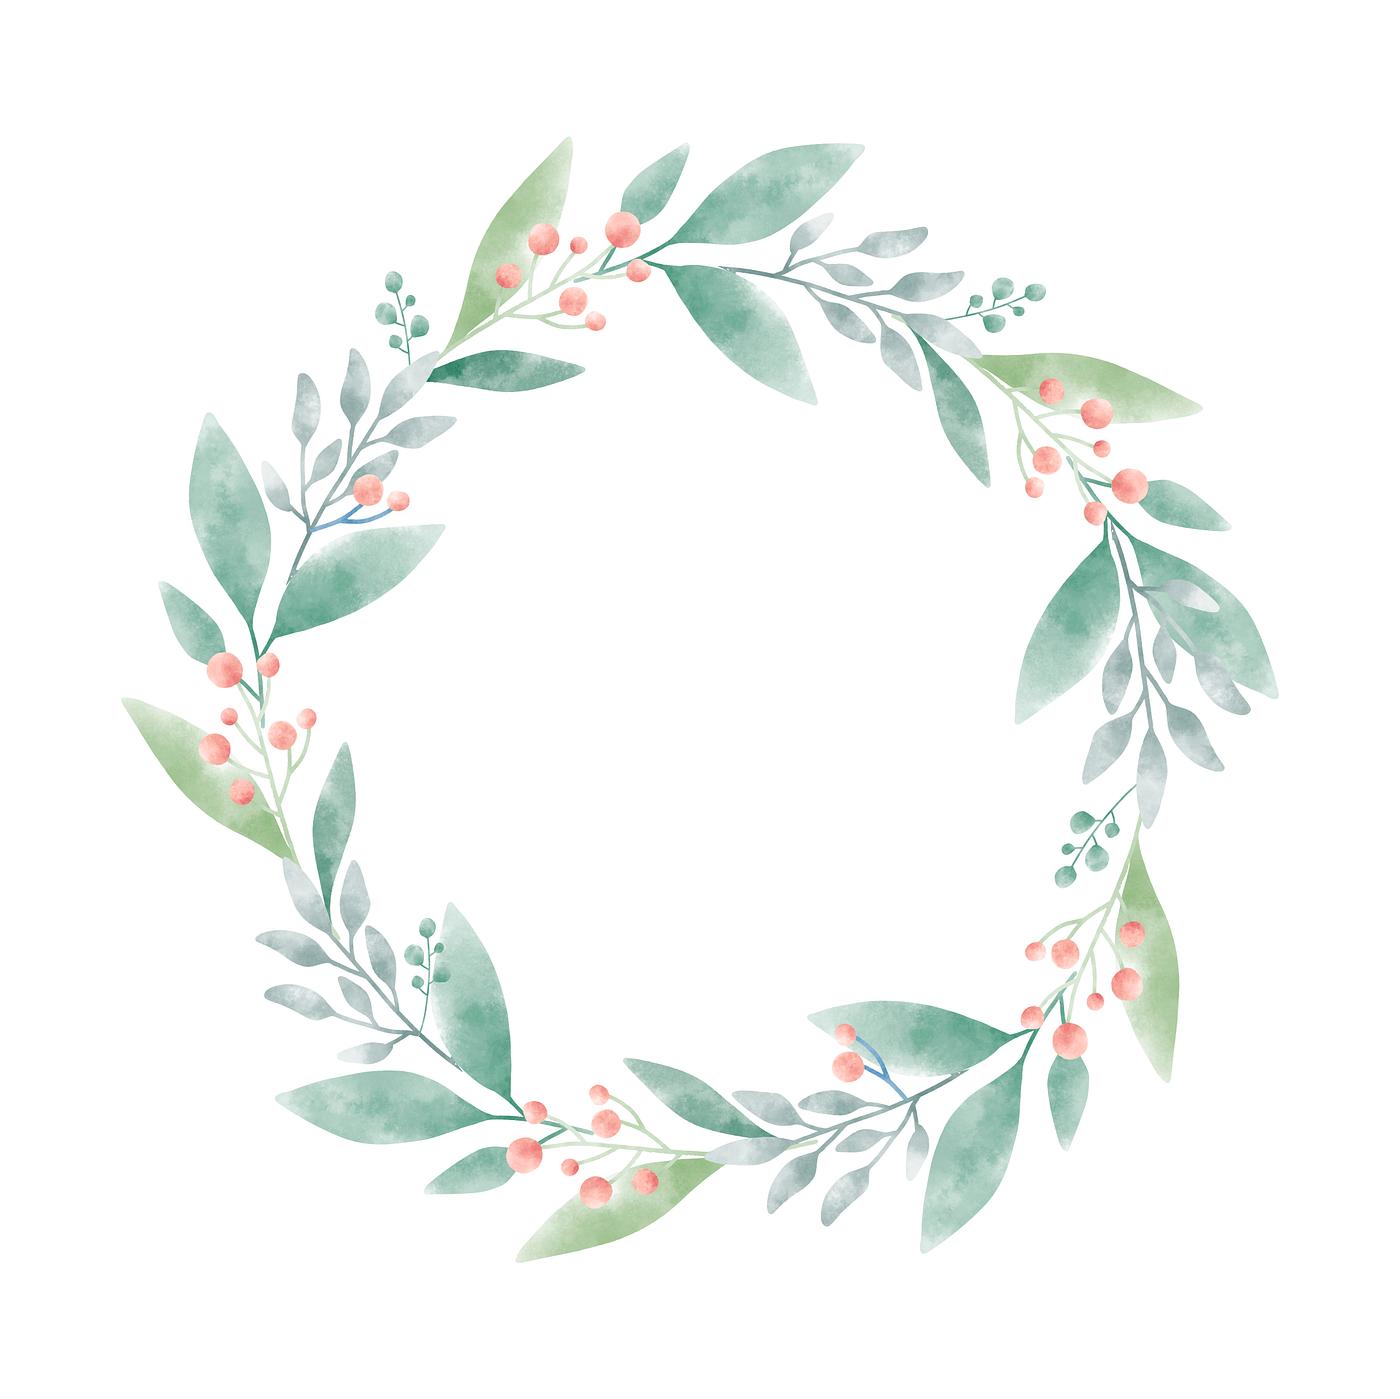 Download Watercolor wreath graphic vector design | Free stock ...